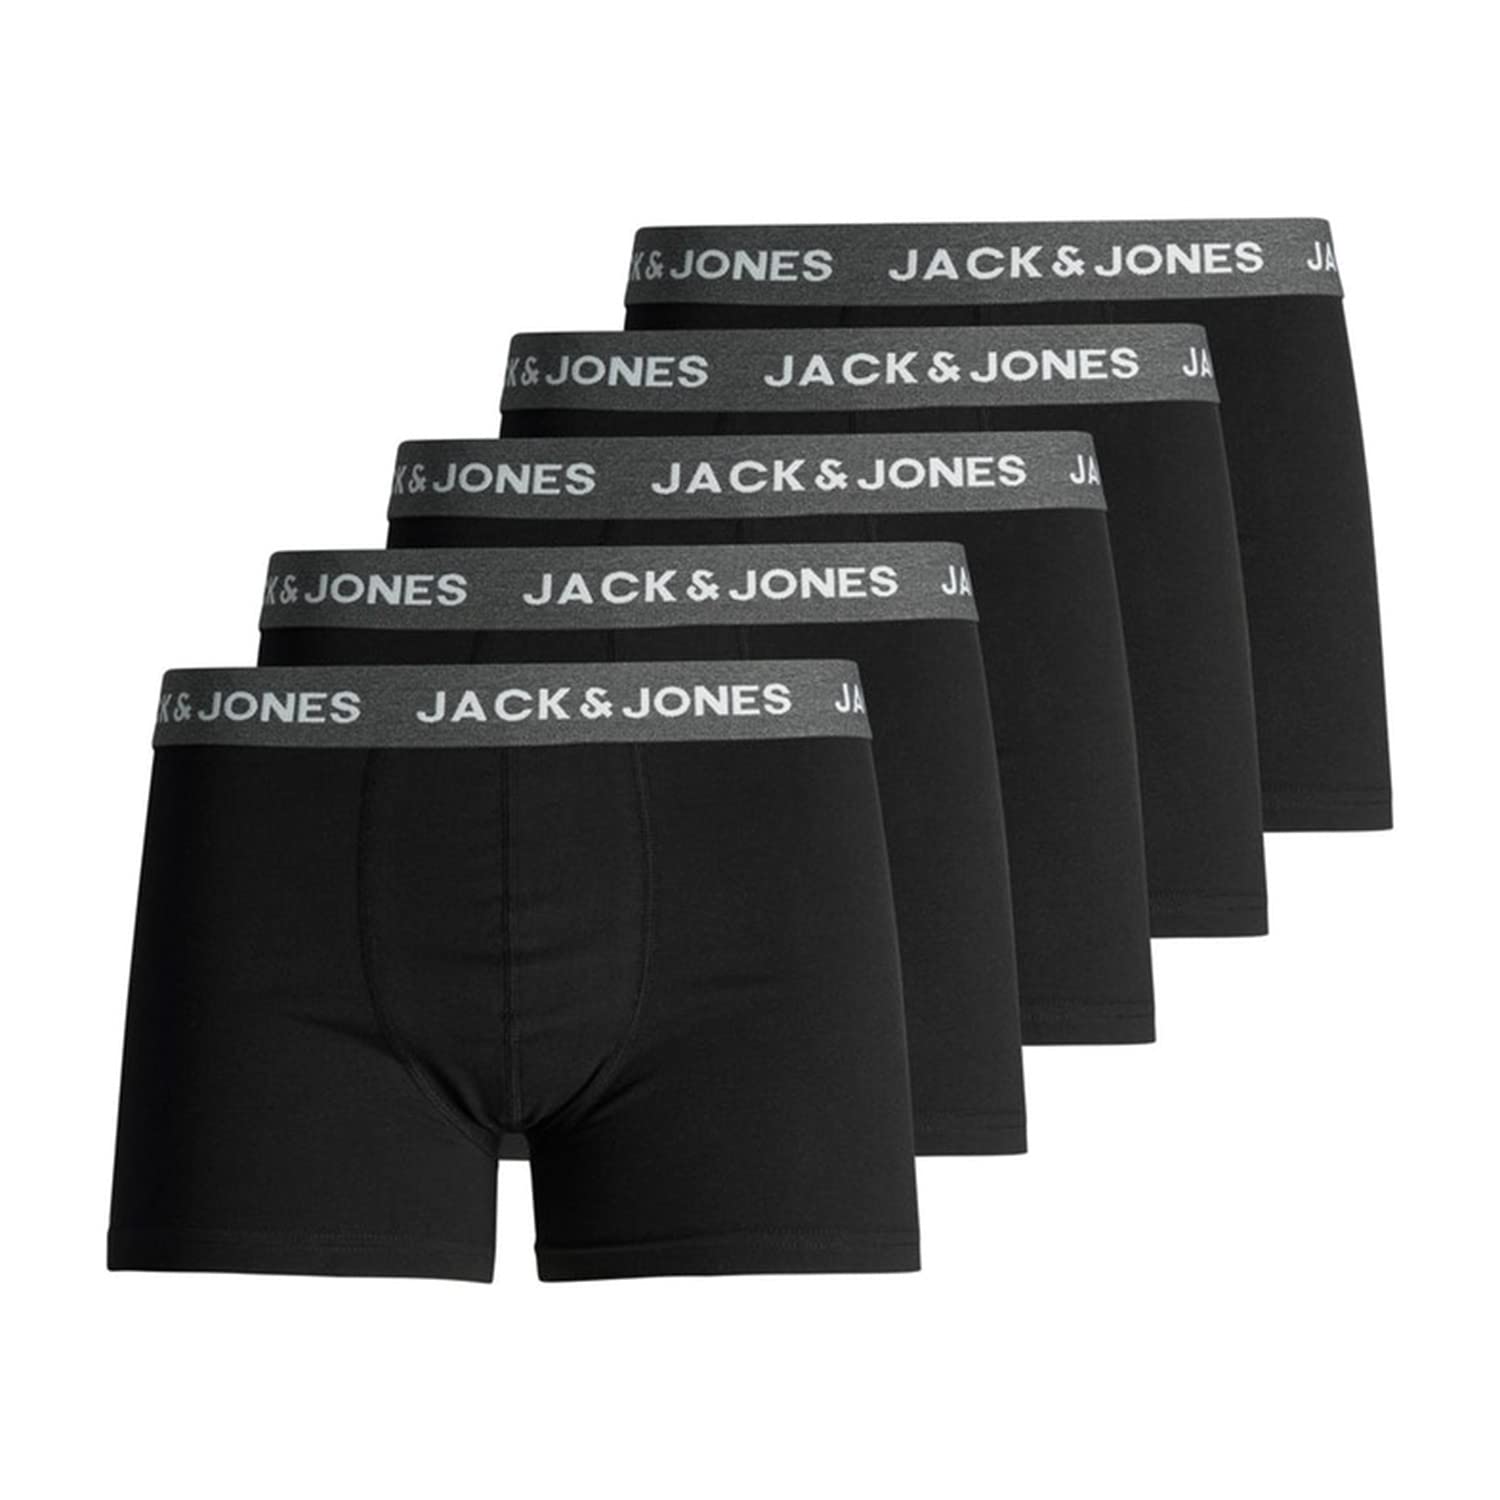 JACK & JONES Herren JACHUEY Trunks 5 Pack, Dark Grey Melange/Black & Blac, S